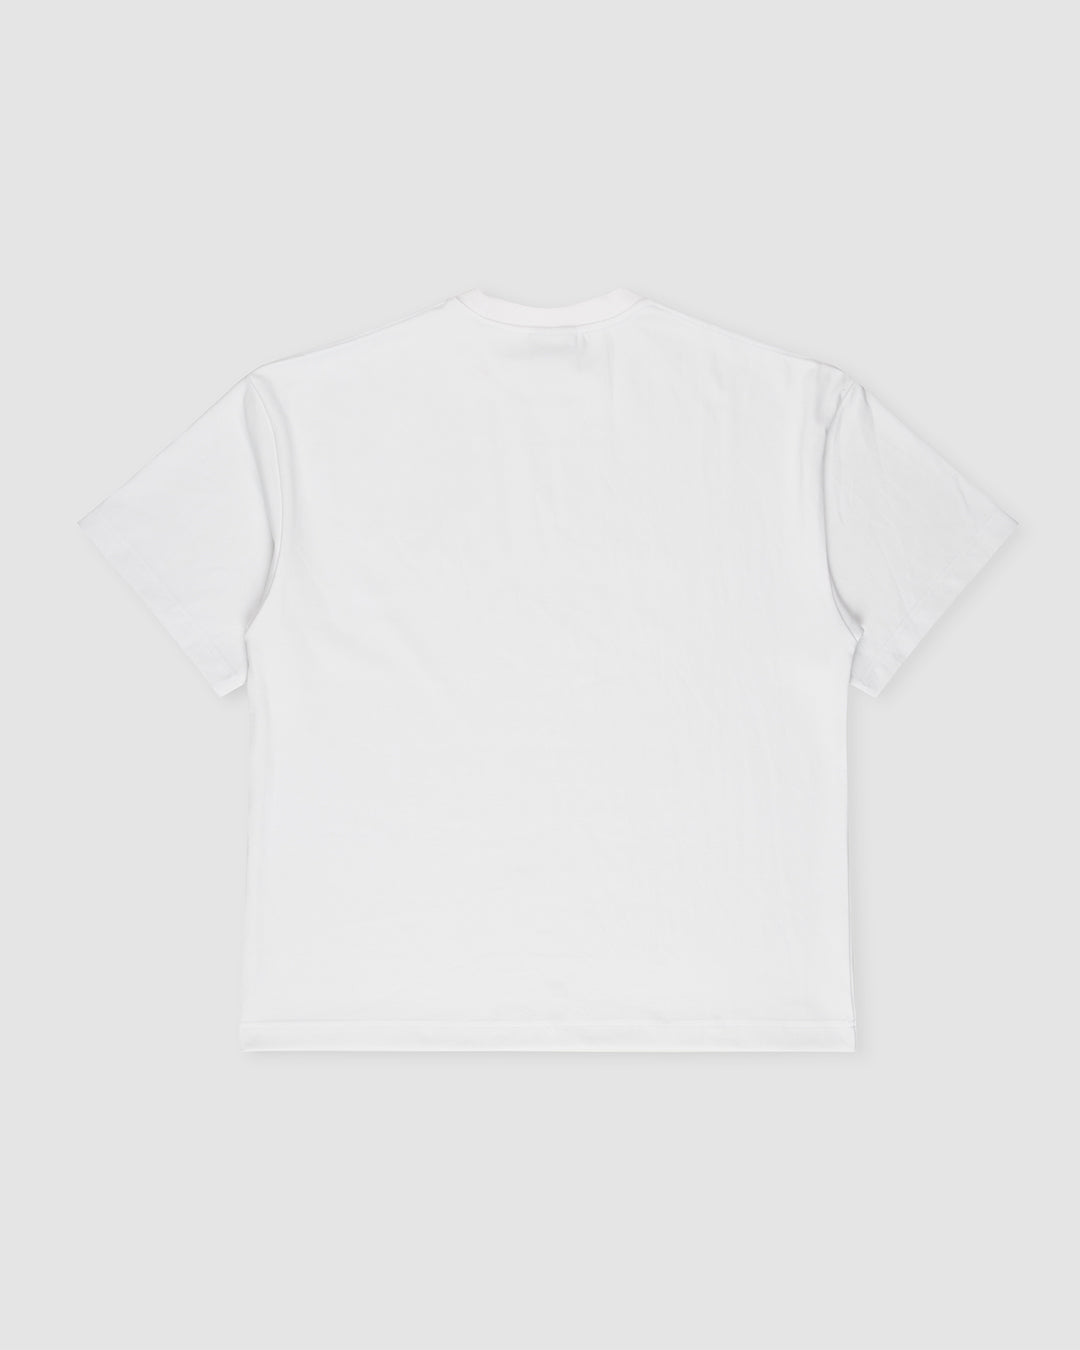 BLURRY RTM 23 T-Shirt (Daisy White/Blue)